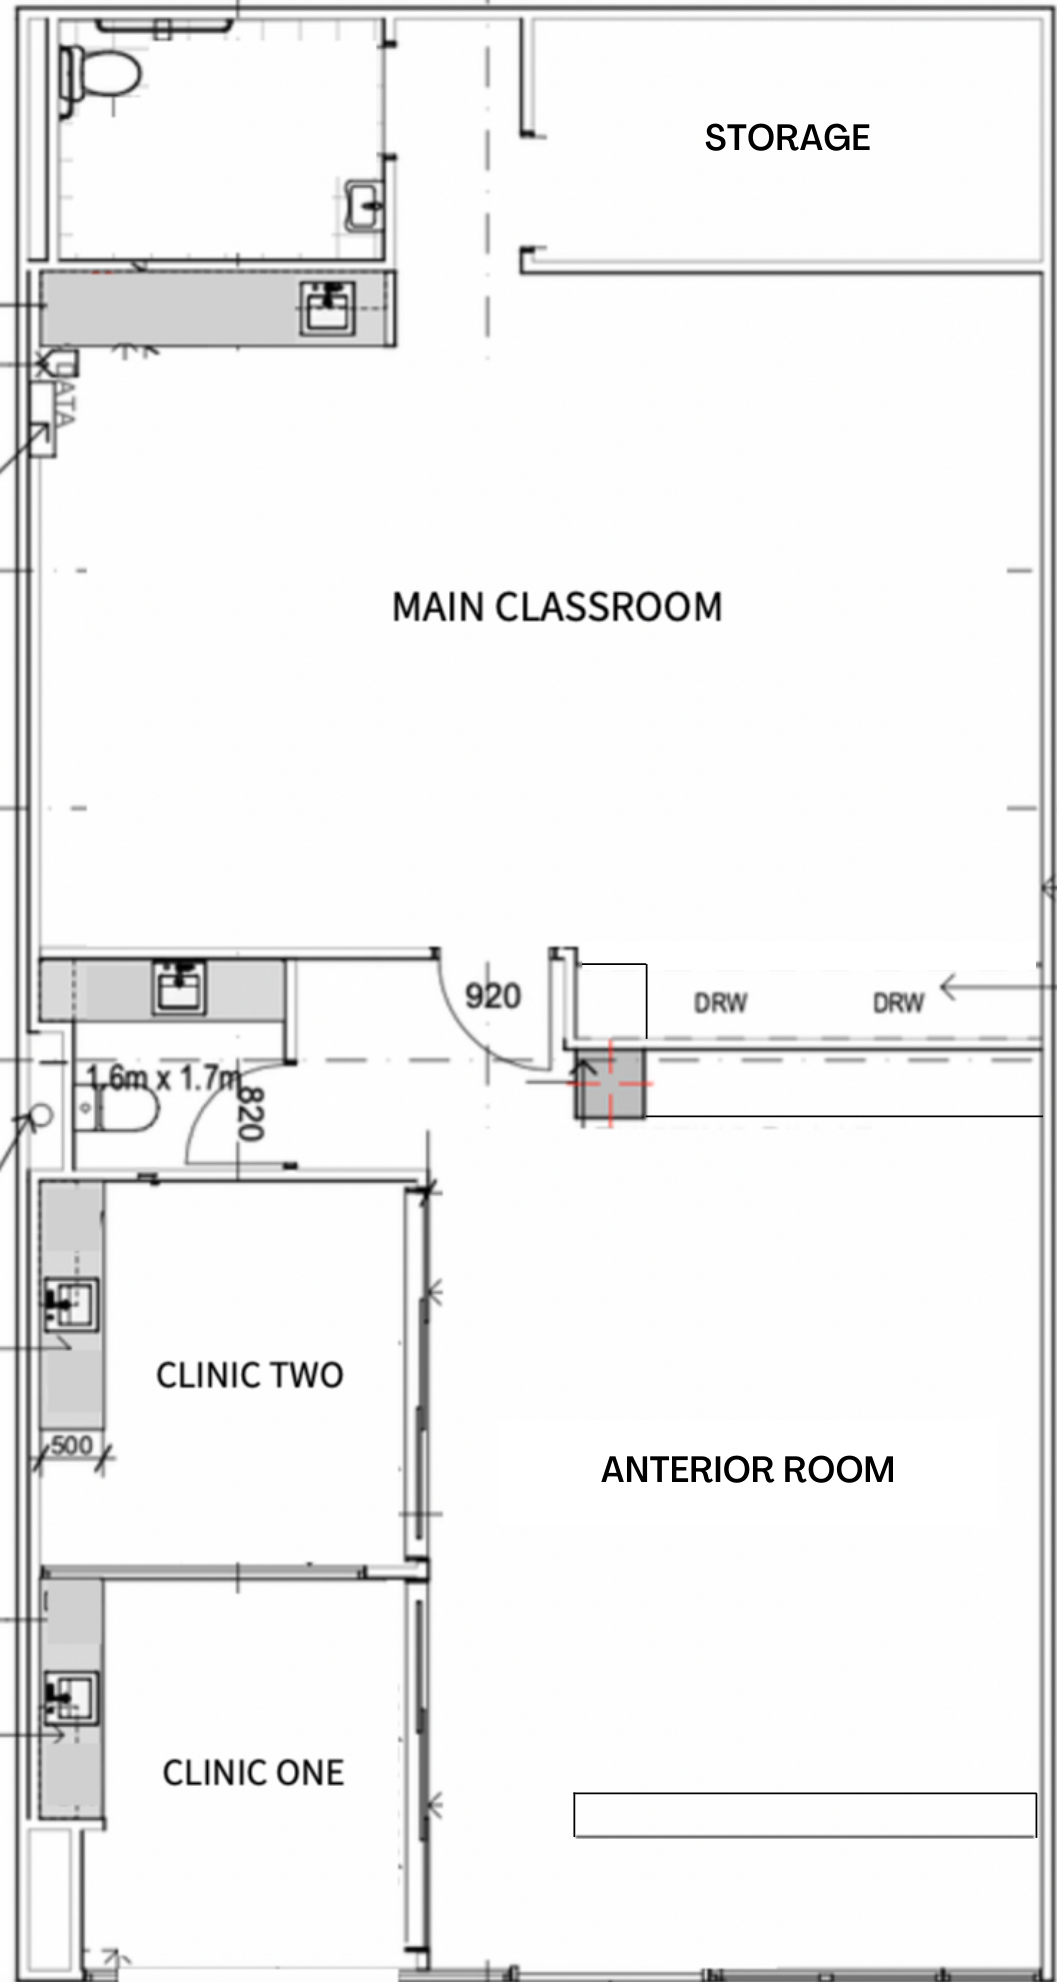 Floor plan of SkillsBox Clinical Space